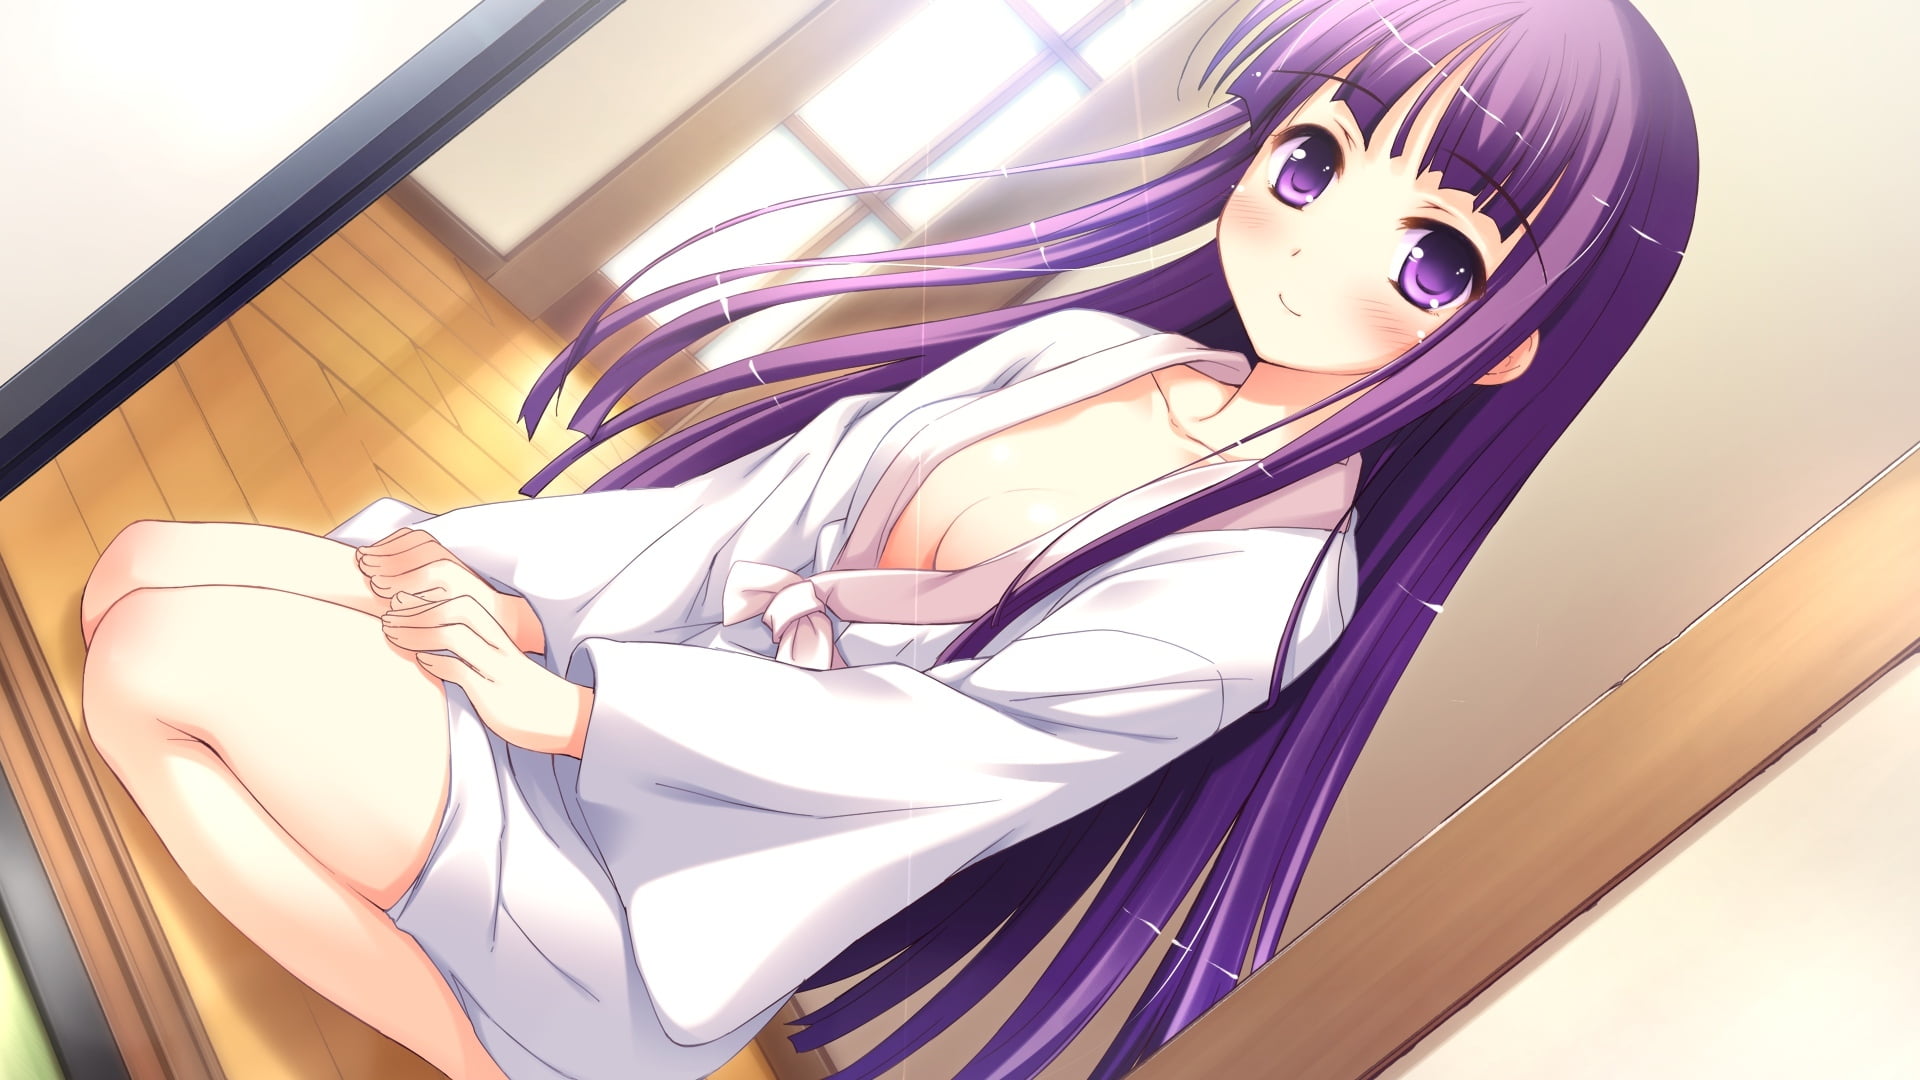 purple hair girl anime character illustration, look, smile, sitting